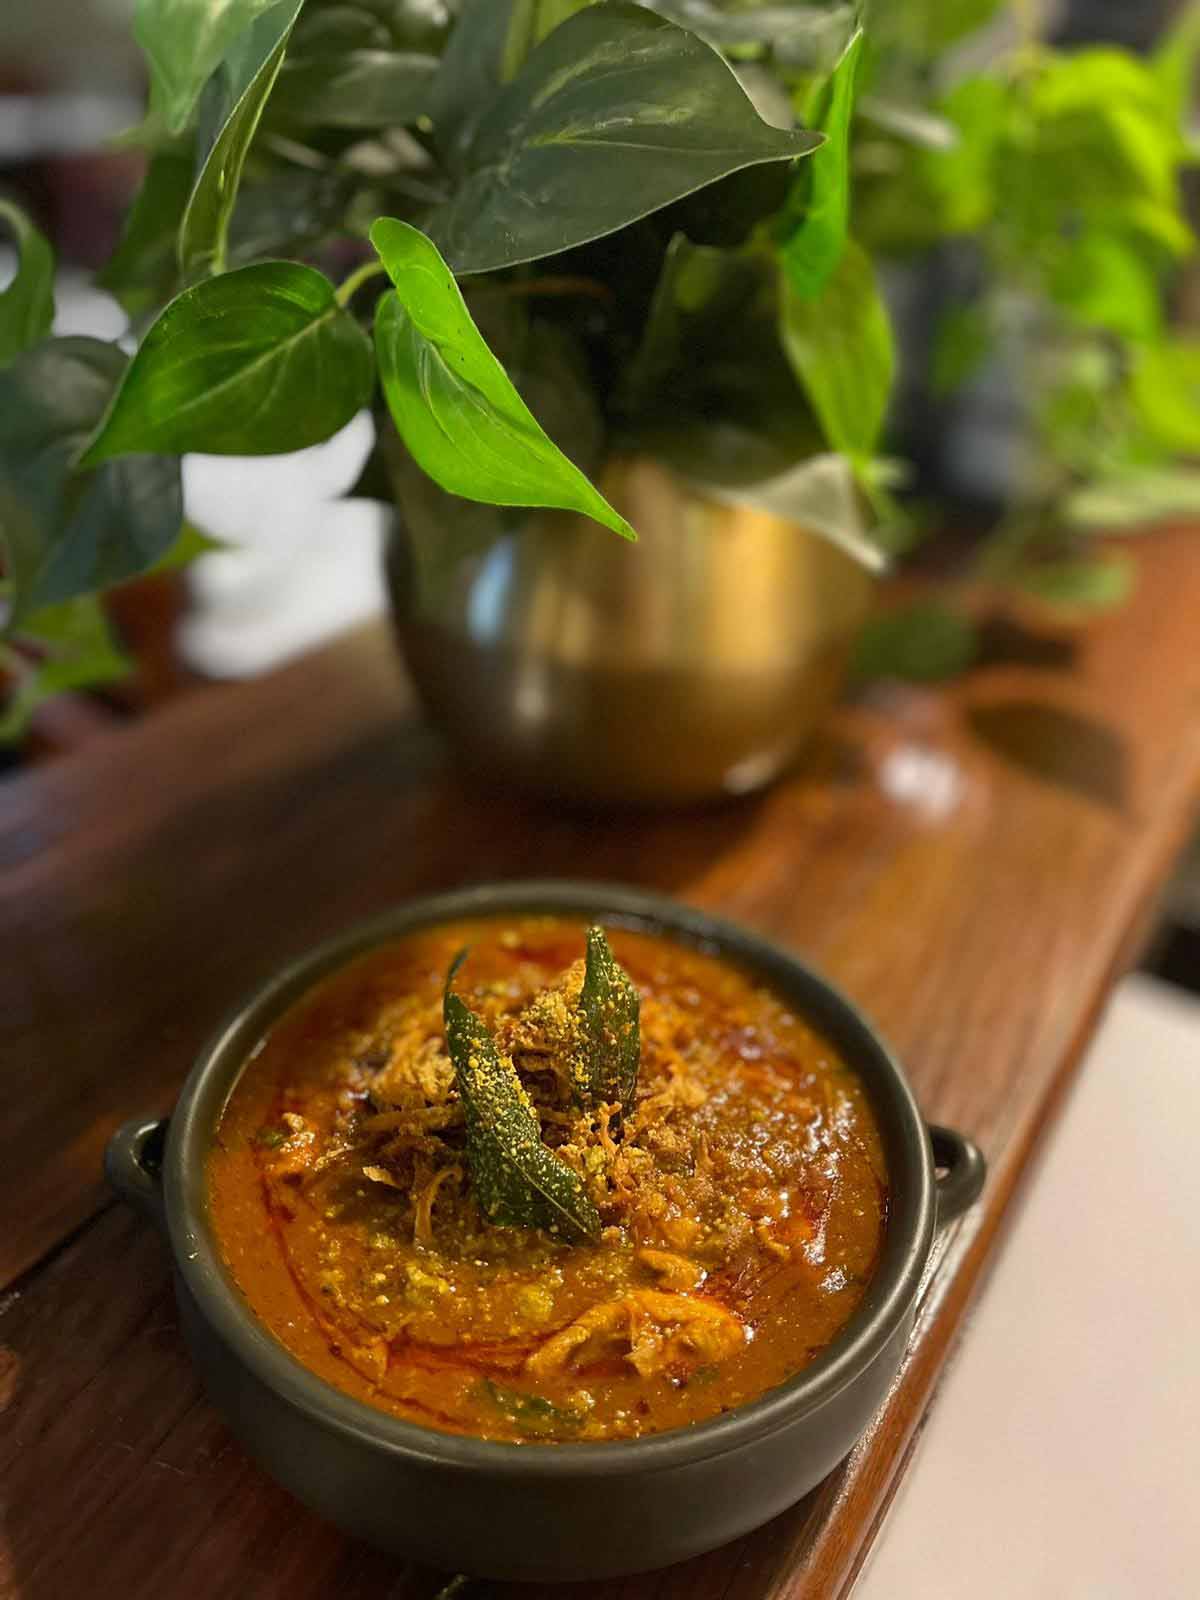 A comforting bowl of stew at Memories of India